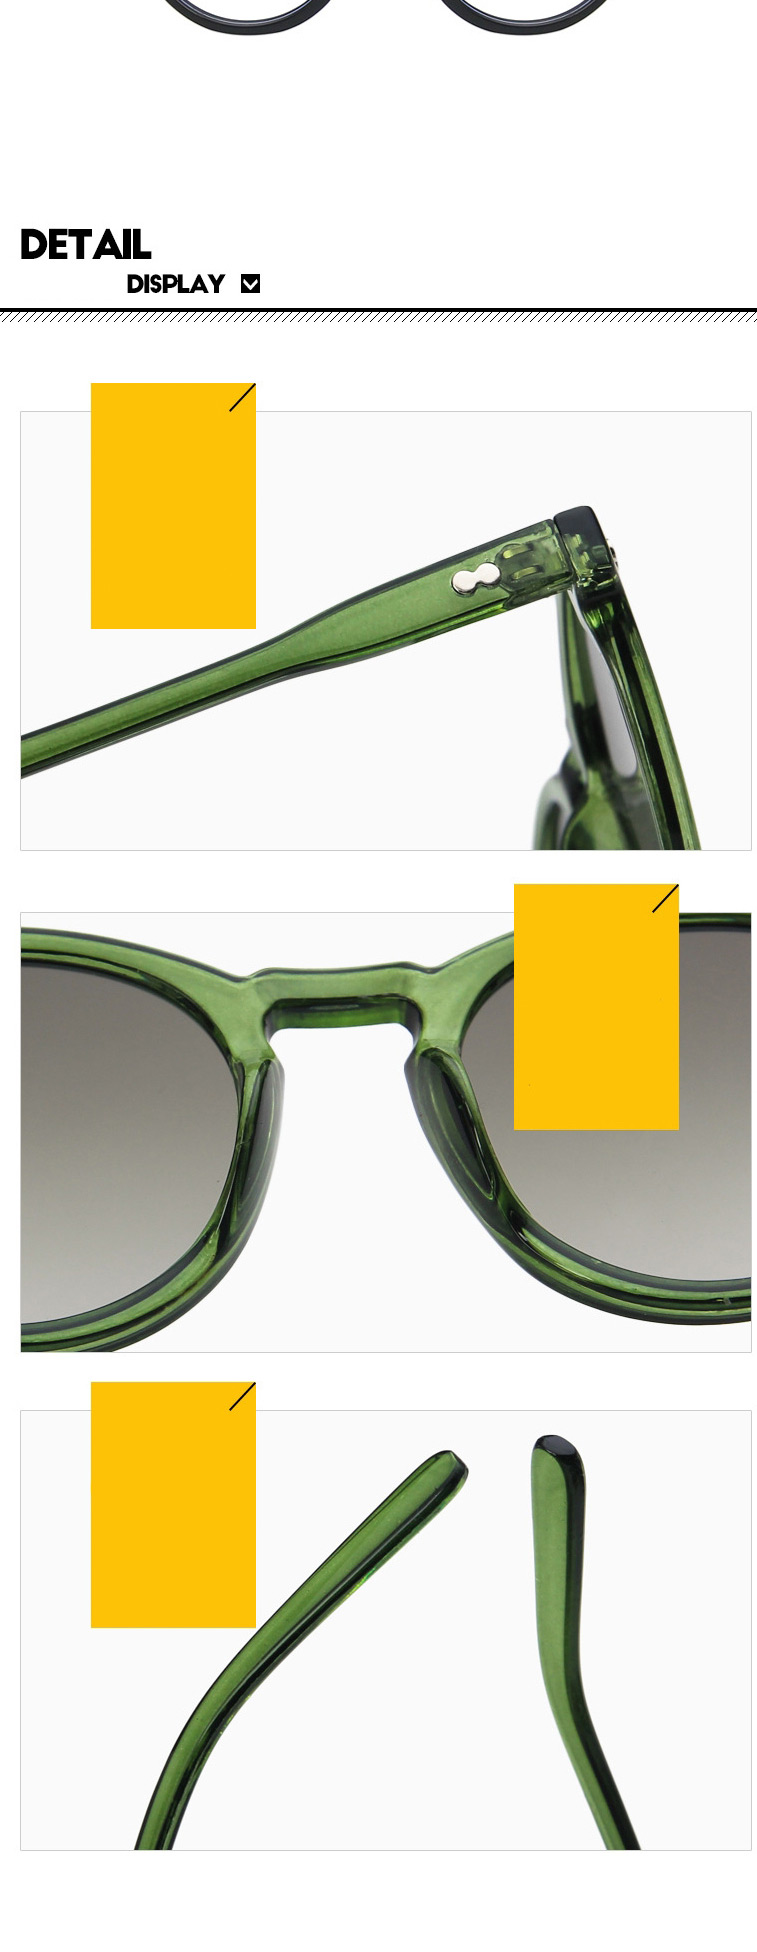 Fashion Leopard Tea Chips Small Frame Mi Nail Resin Round Sunglasses,Women Sunglasses